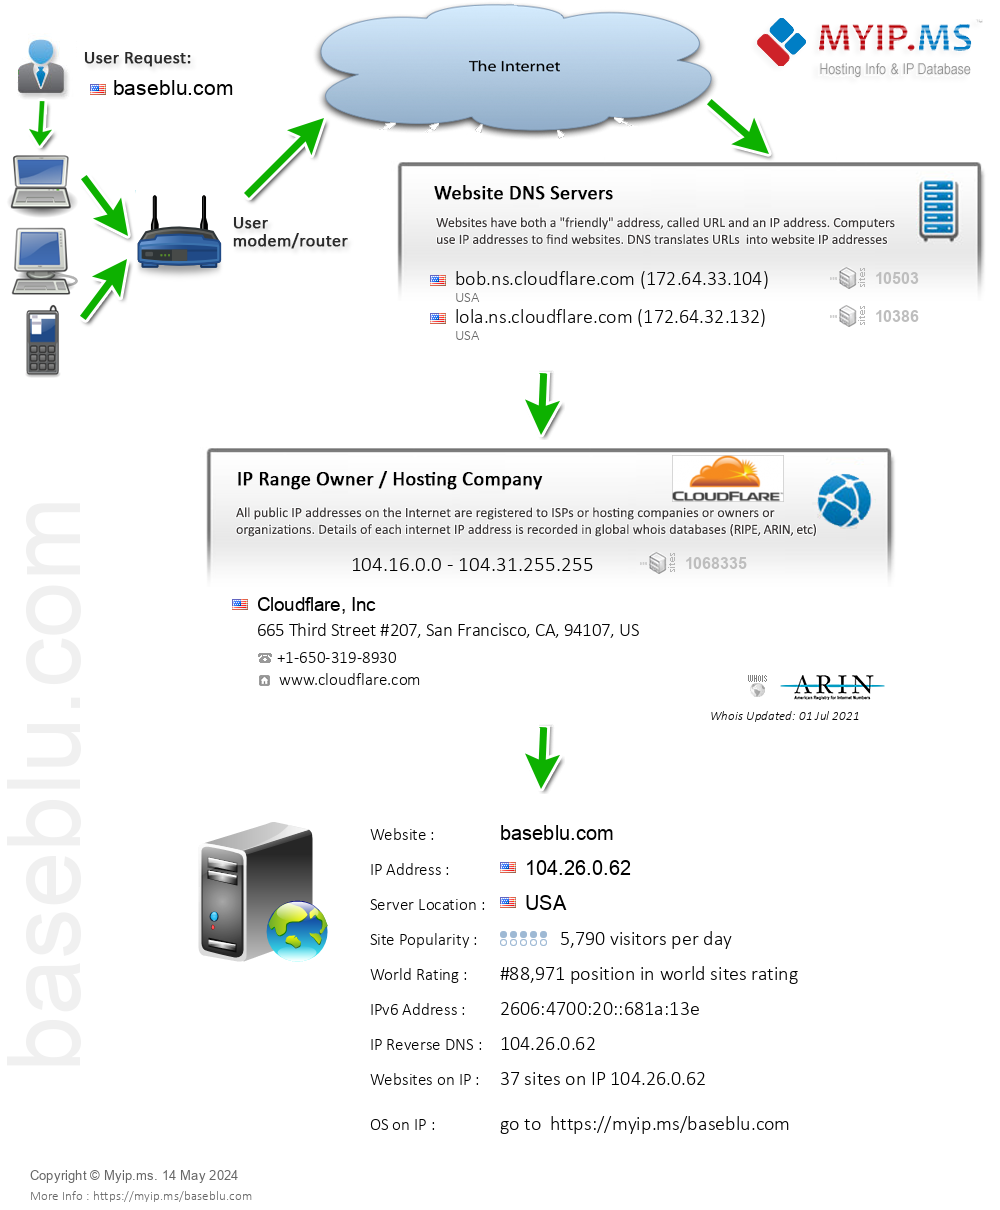 Baseblu.com - Website Hosting Visual IP Diagram